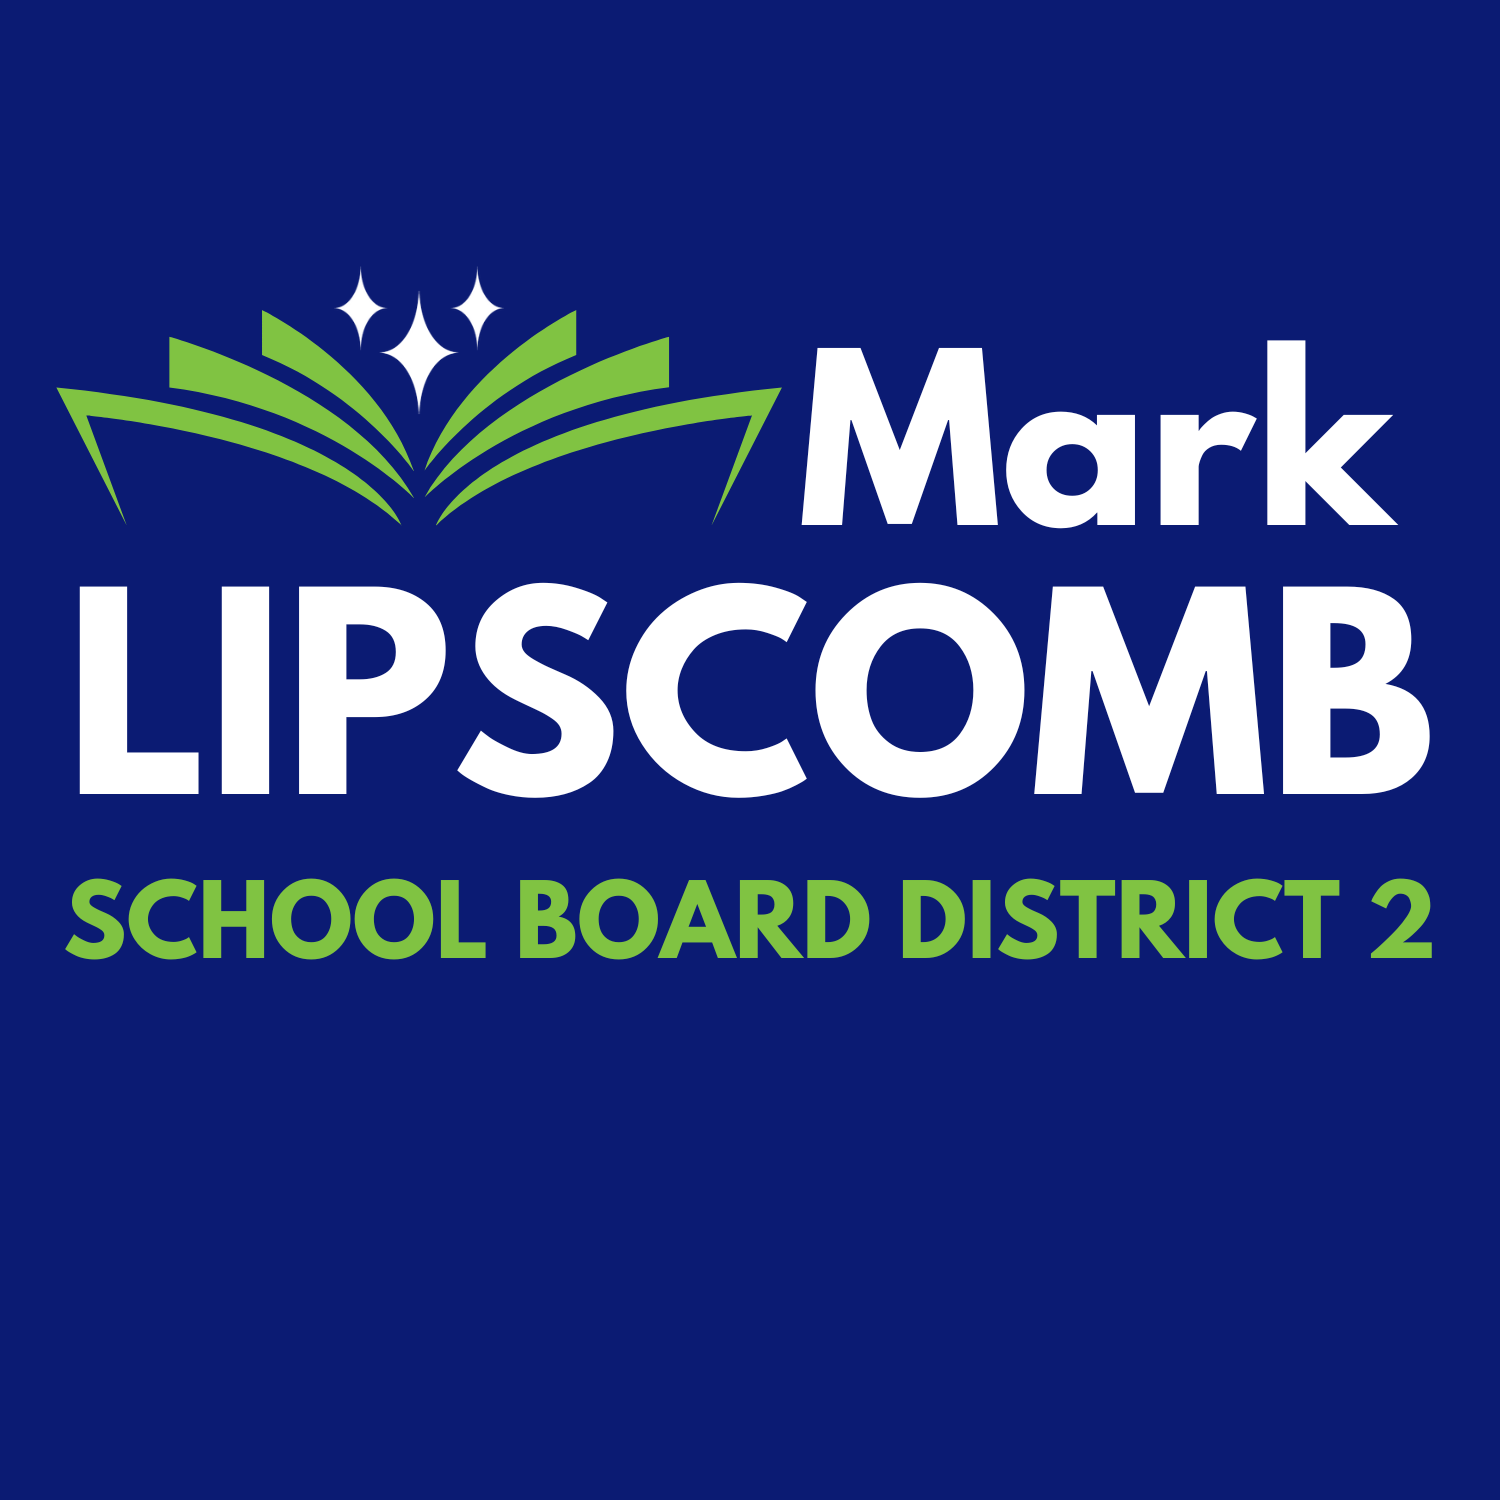 Mark Lipscomb